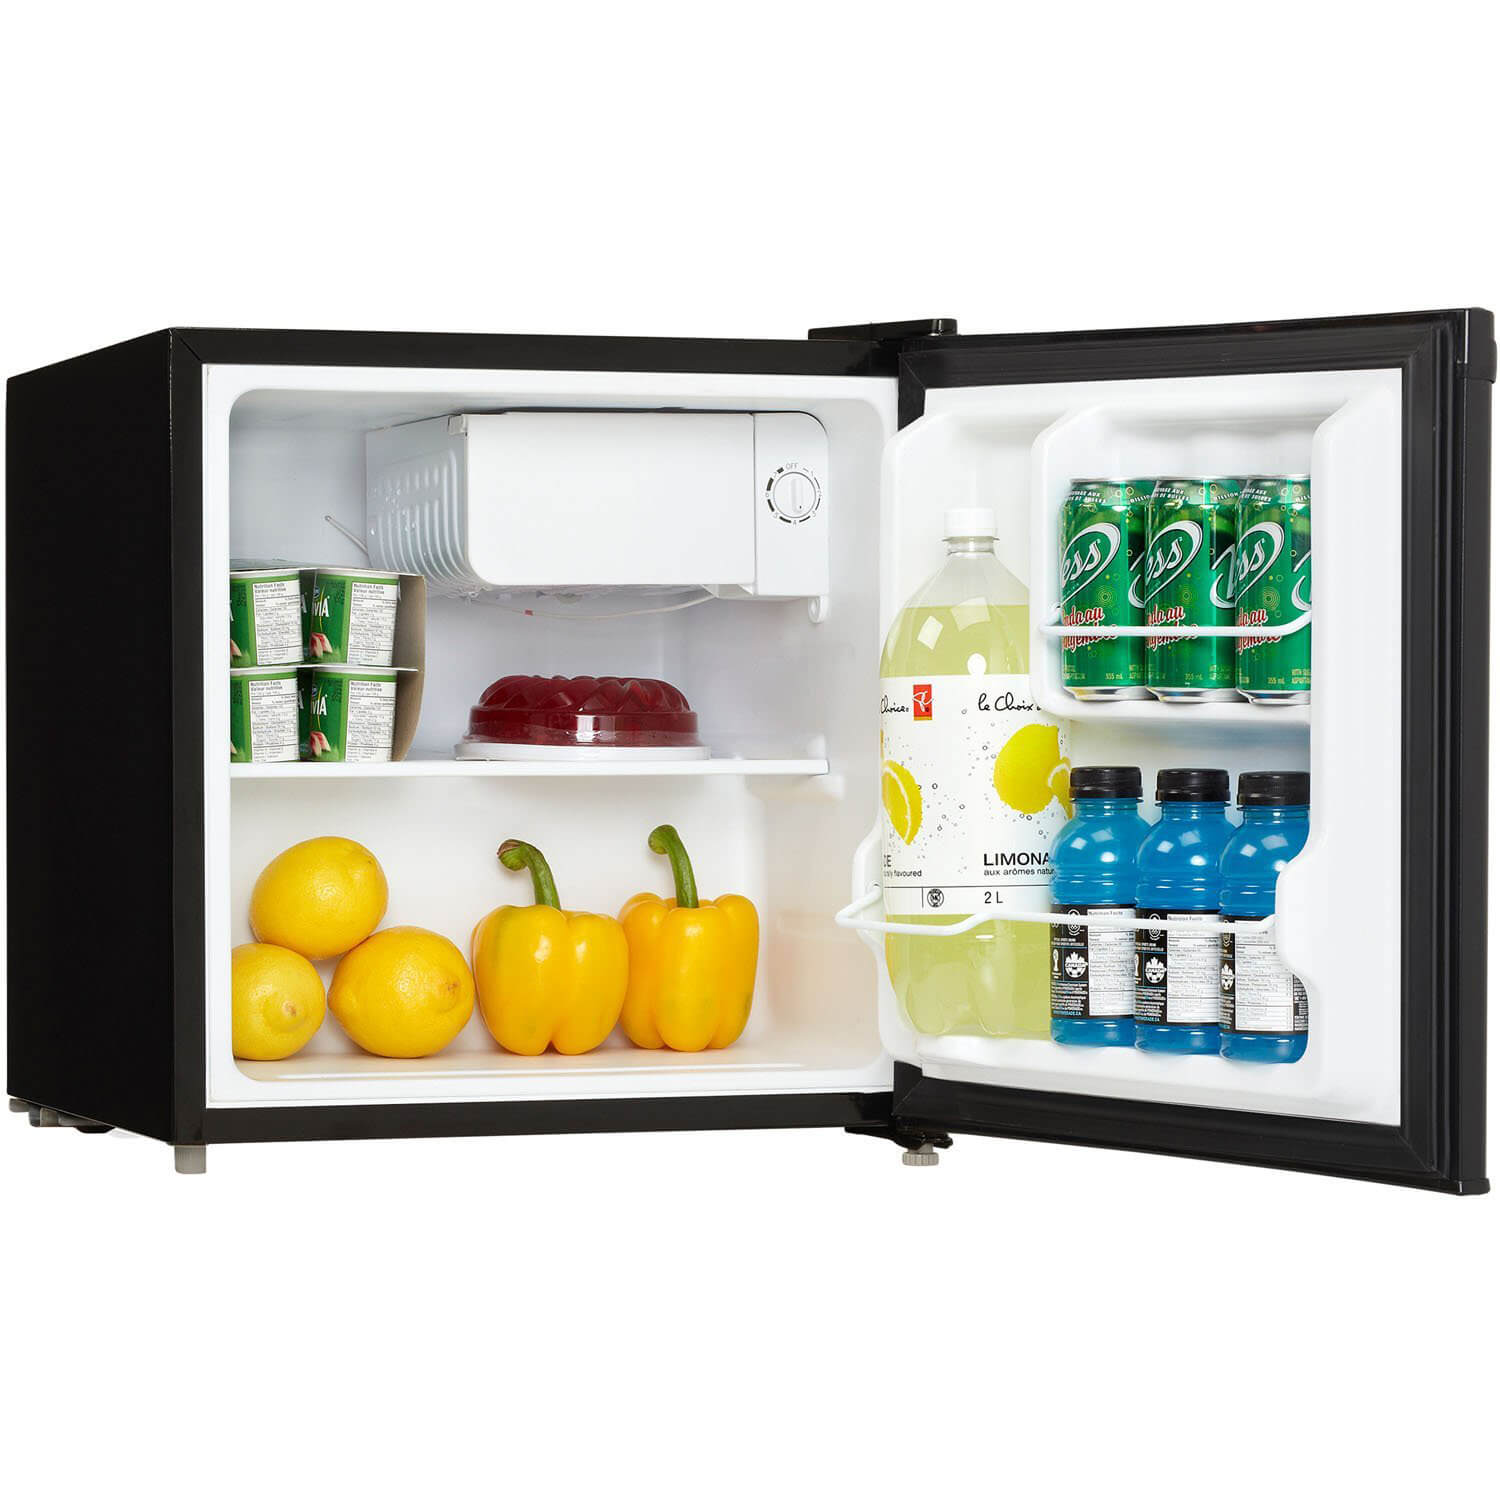 Danby 1.6 Cu Ft. Compact Refrigerator DCR016C1BDB, Black - image 2 of 2